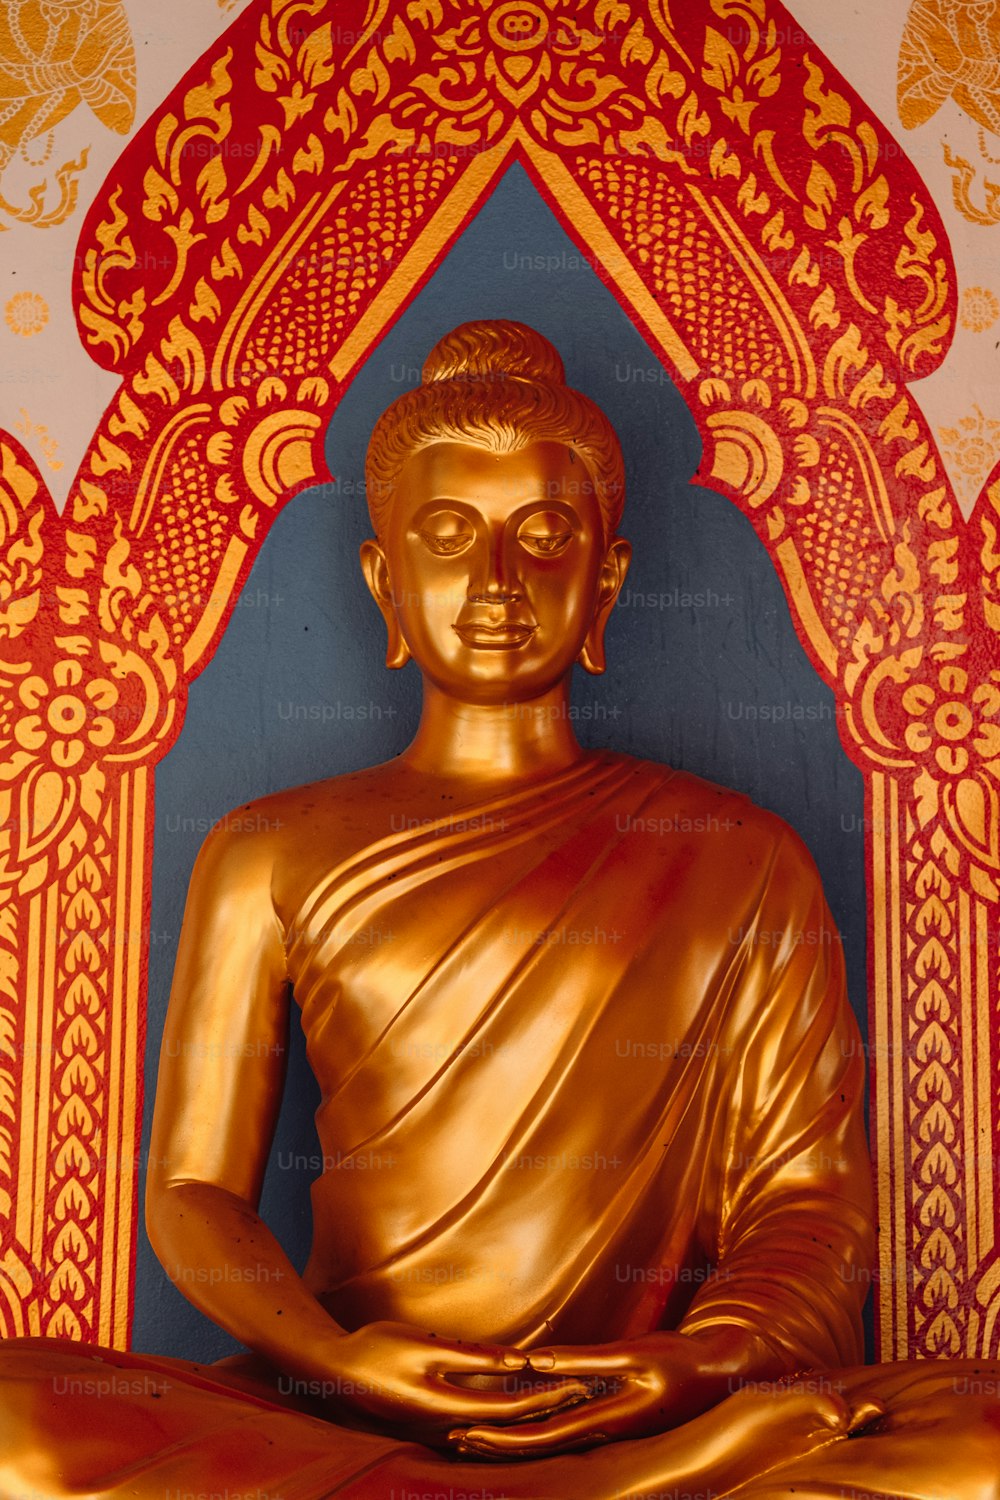 Una estatua dorada de Buda sentada frente a una pared roja y dorada